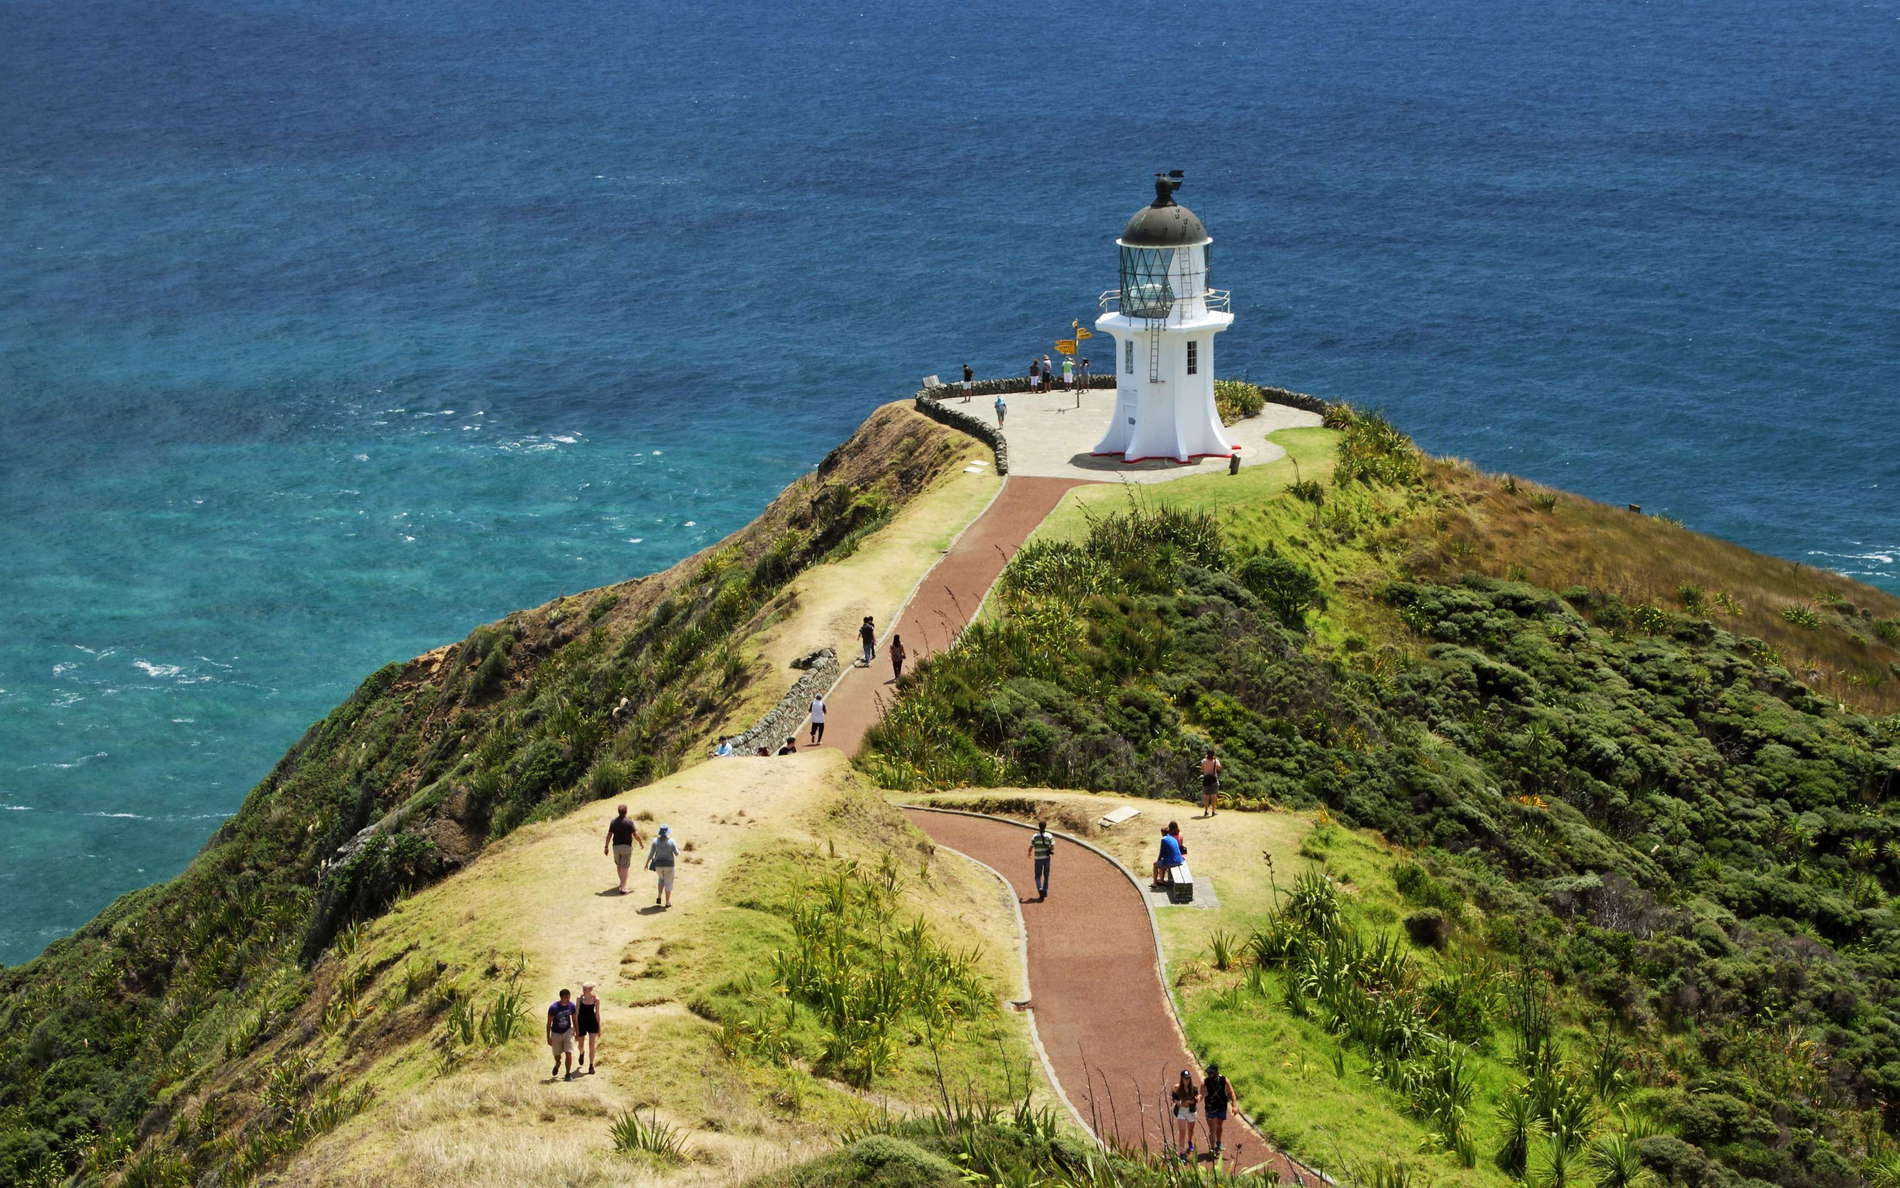 Cape Reinga with lighthouse